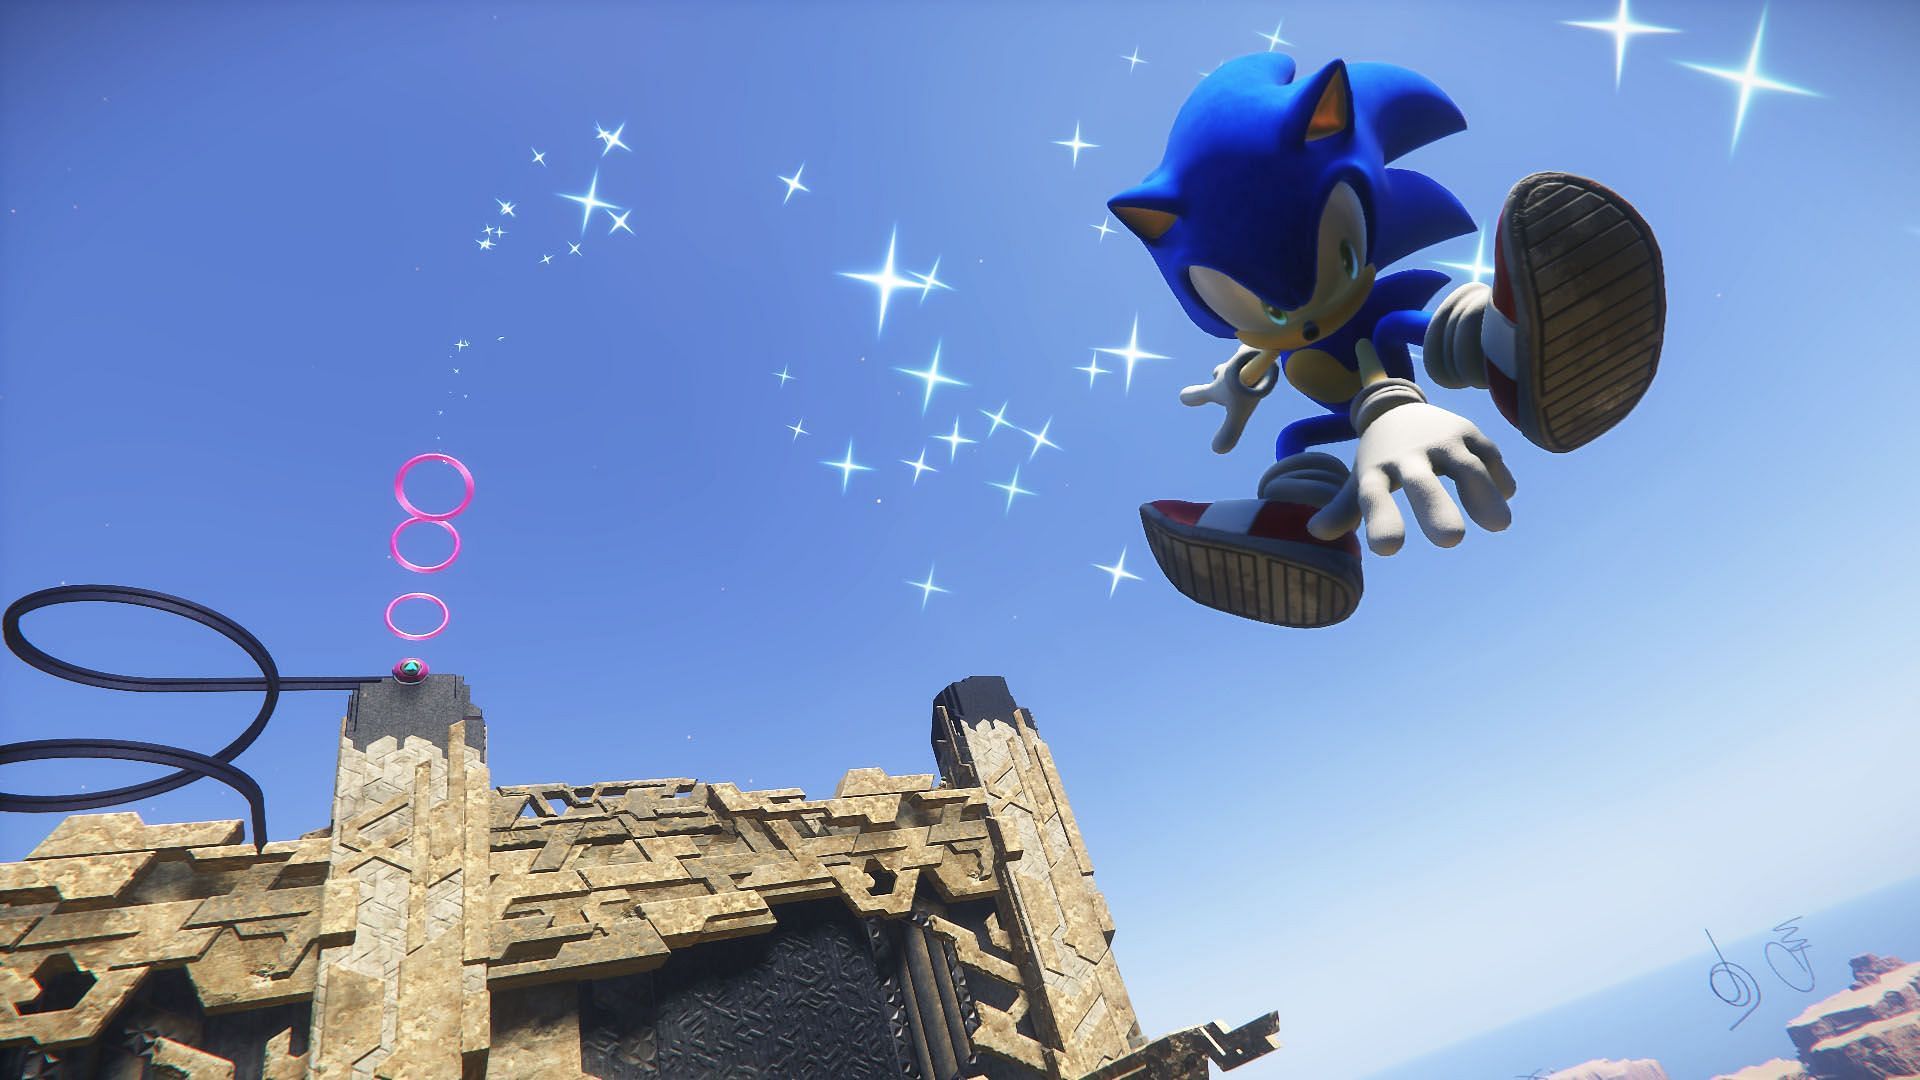 Sonic traversing through the open-zone world of the game (Image via Sega)